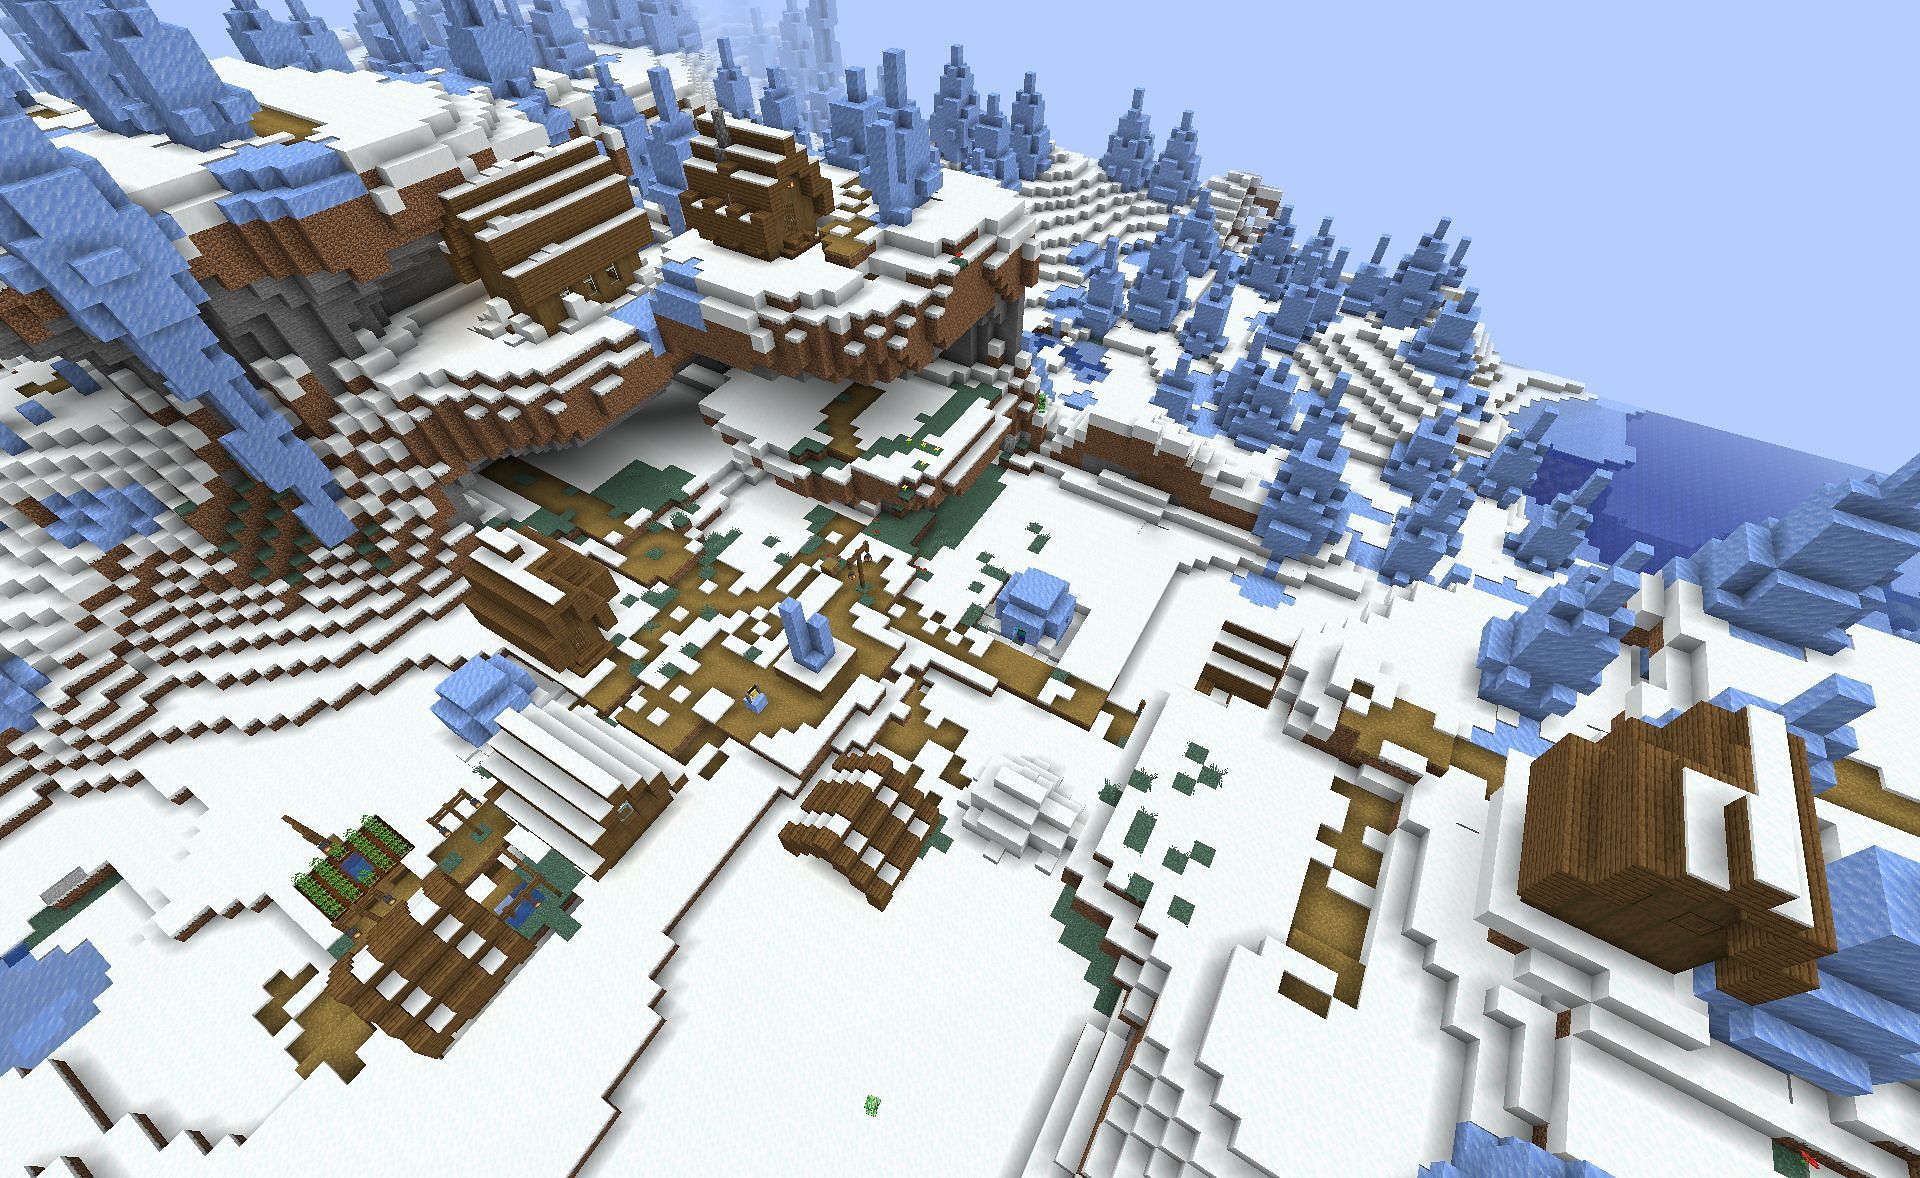 A snow village near ice spikes (Image via Minecraft)